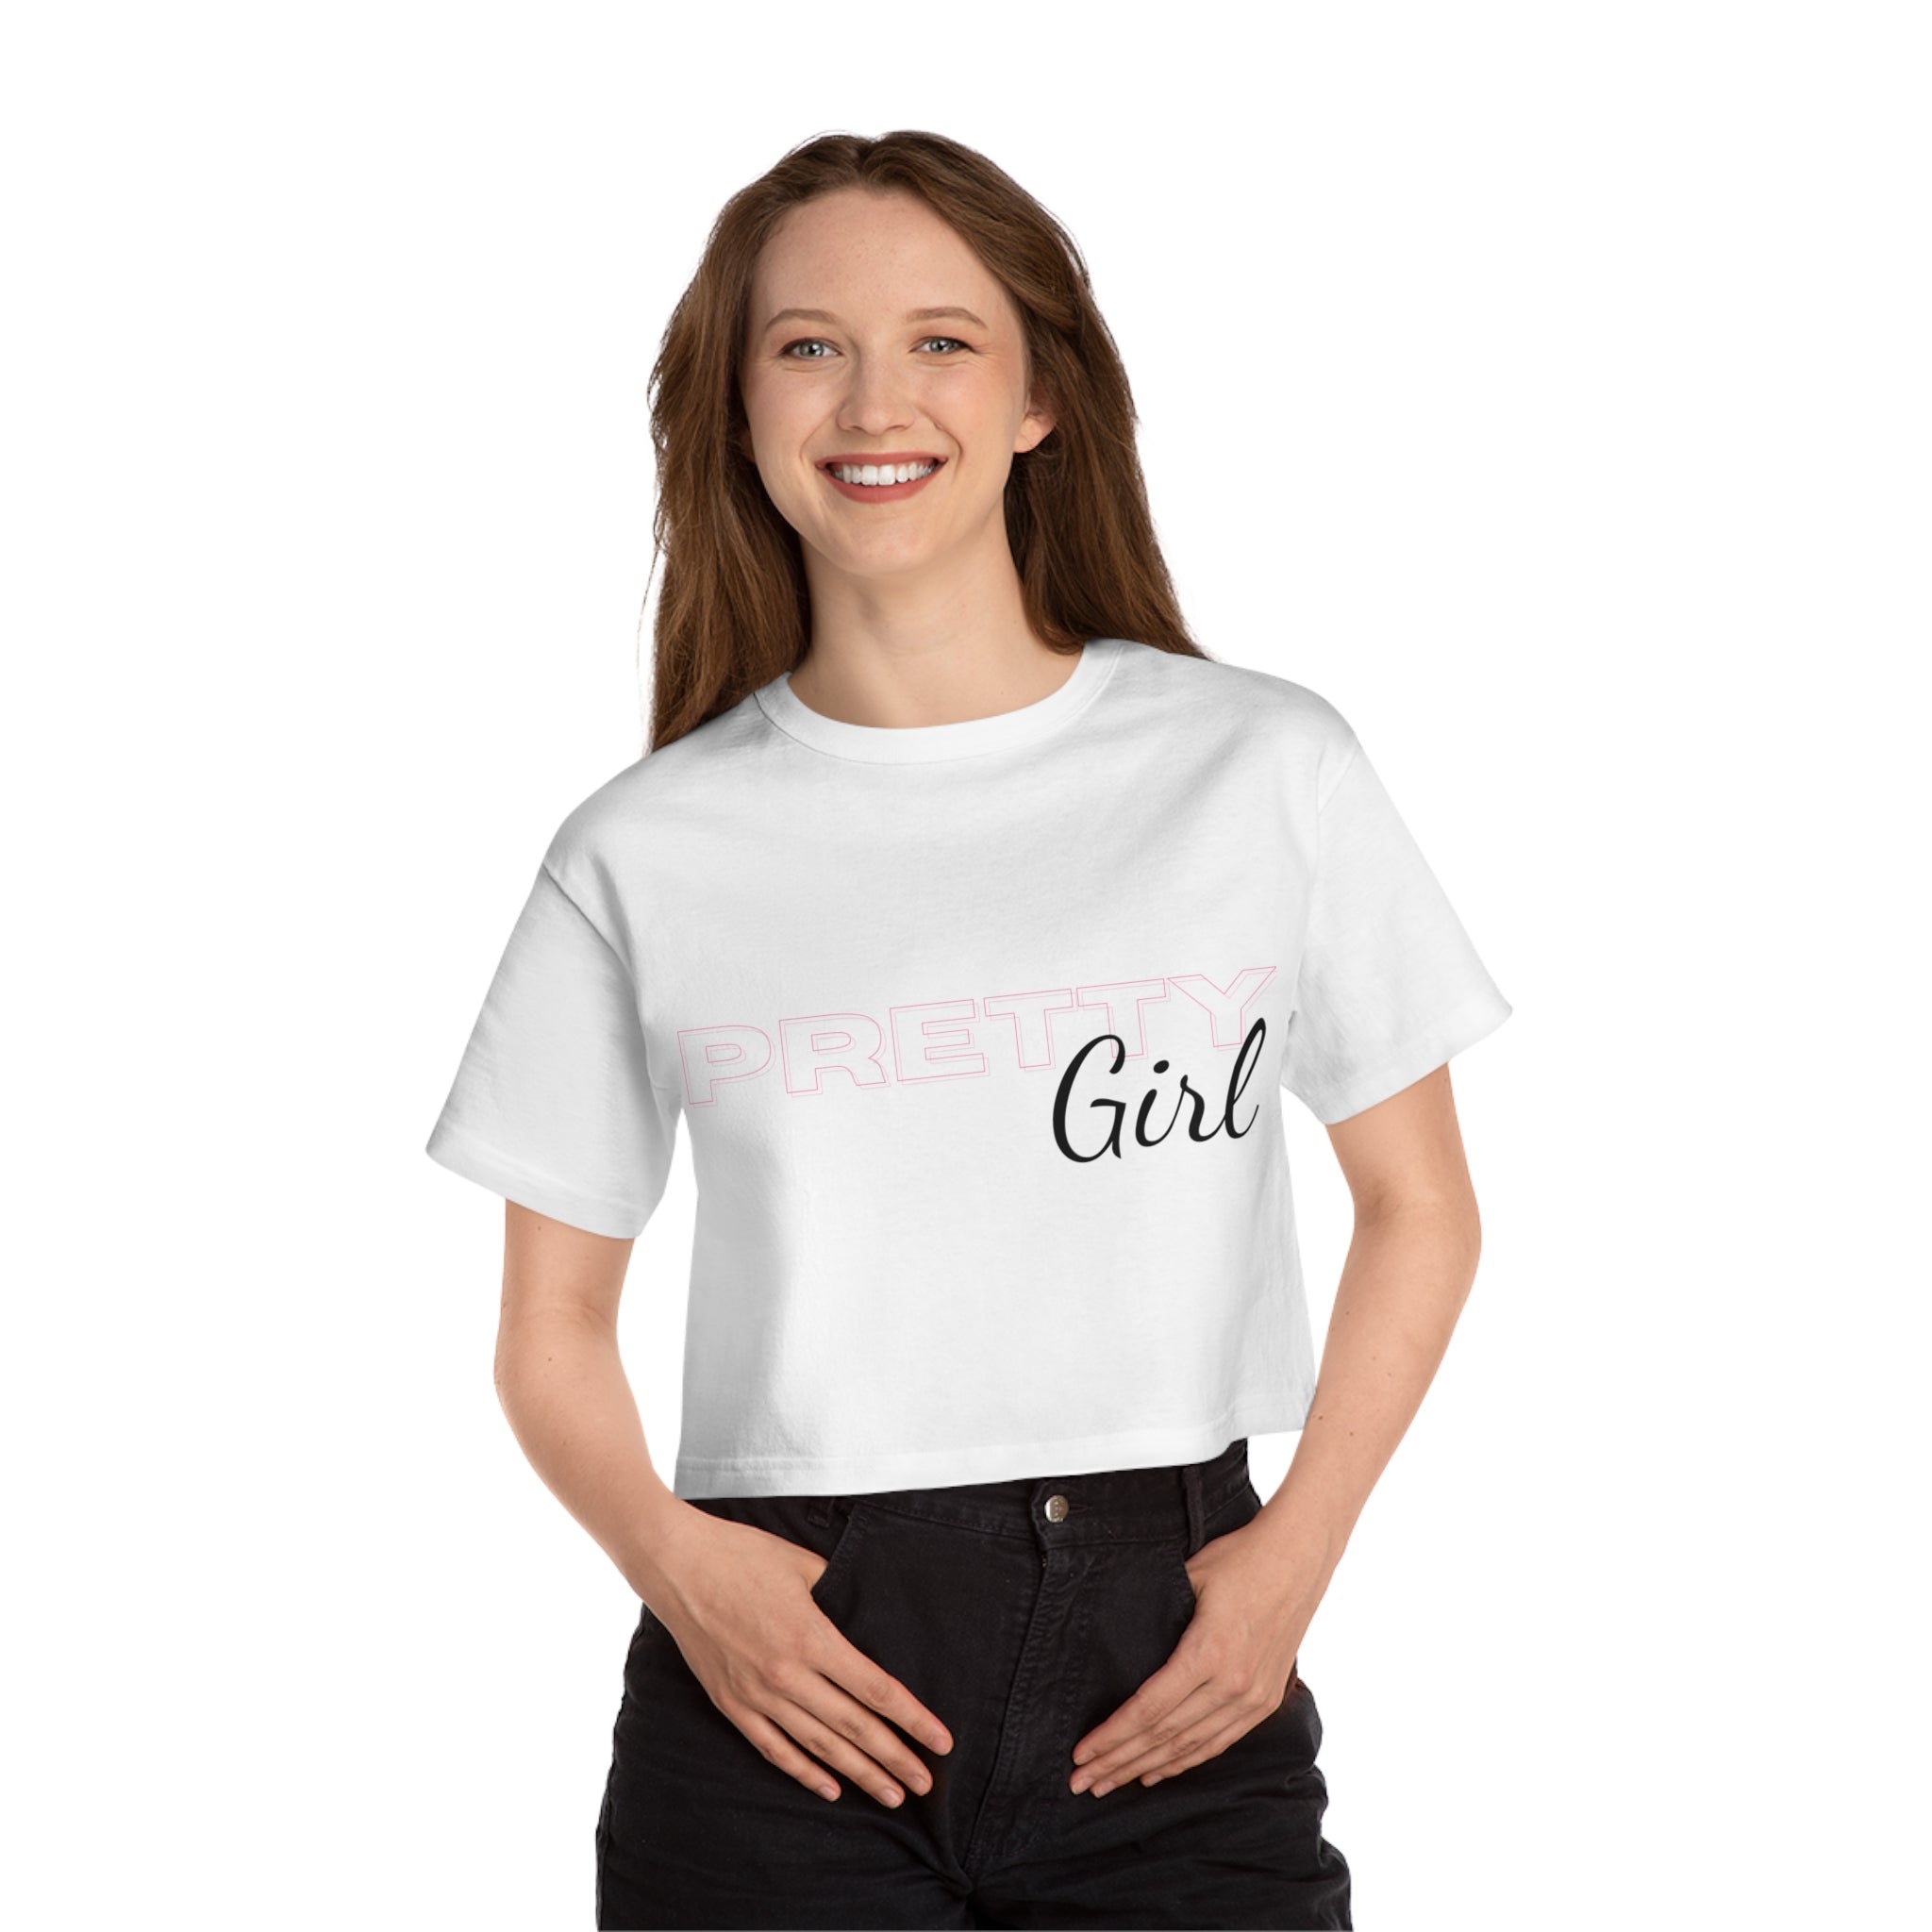 Pretty Girl Cropped T-Shirt